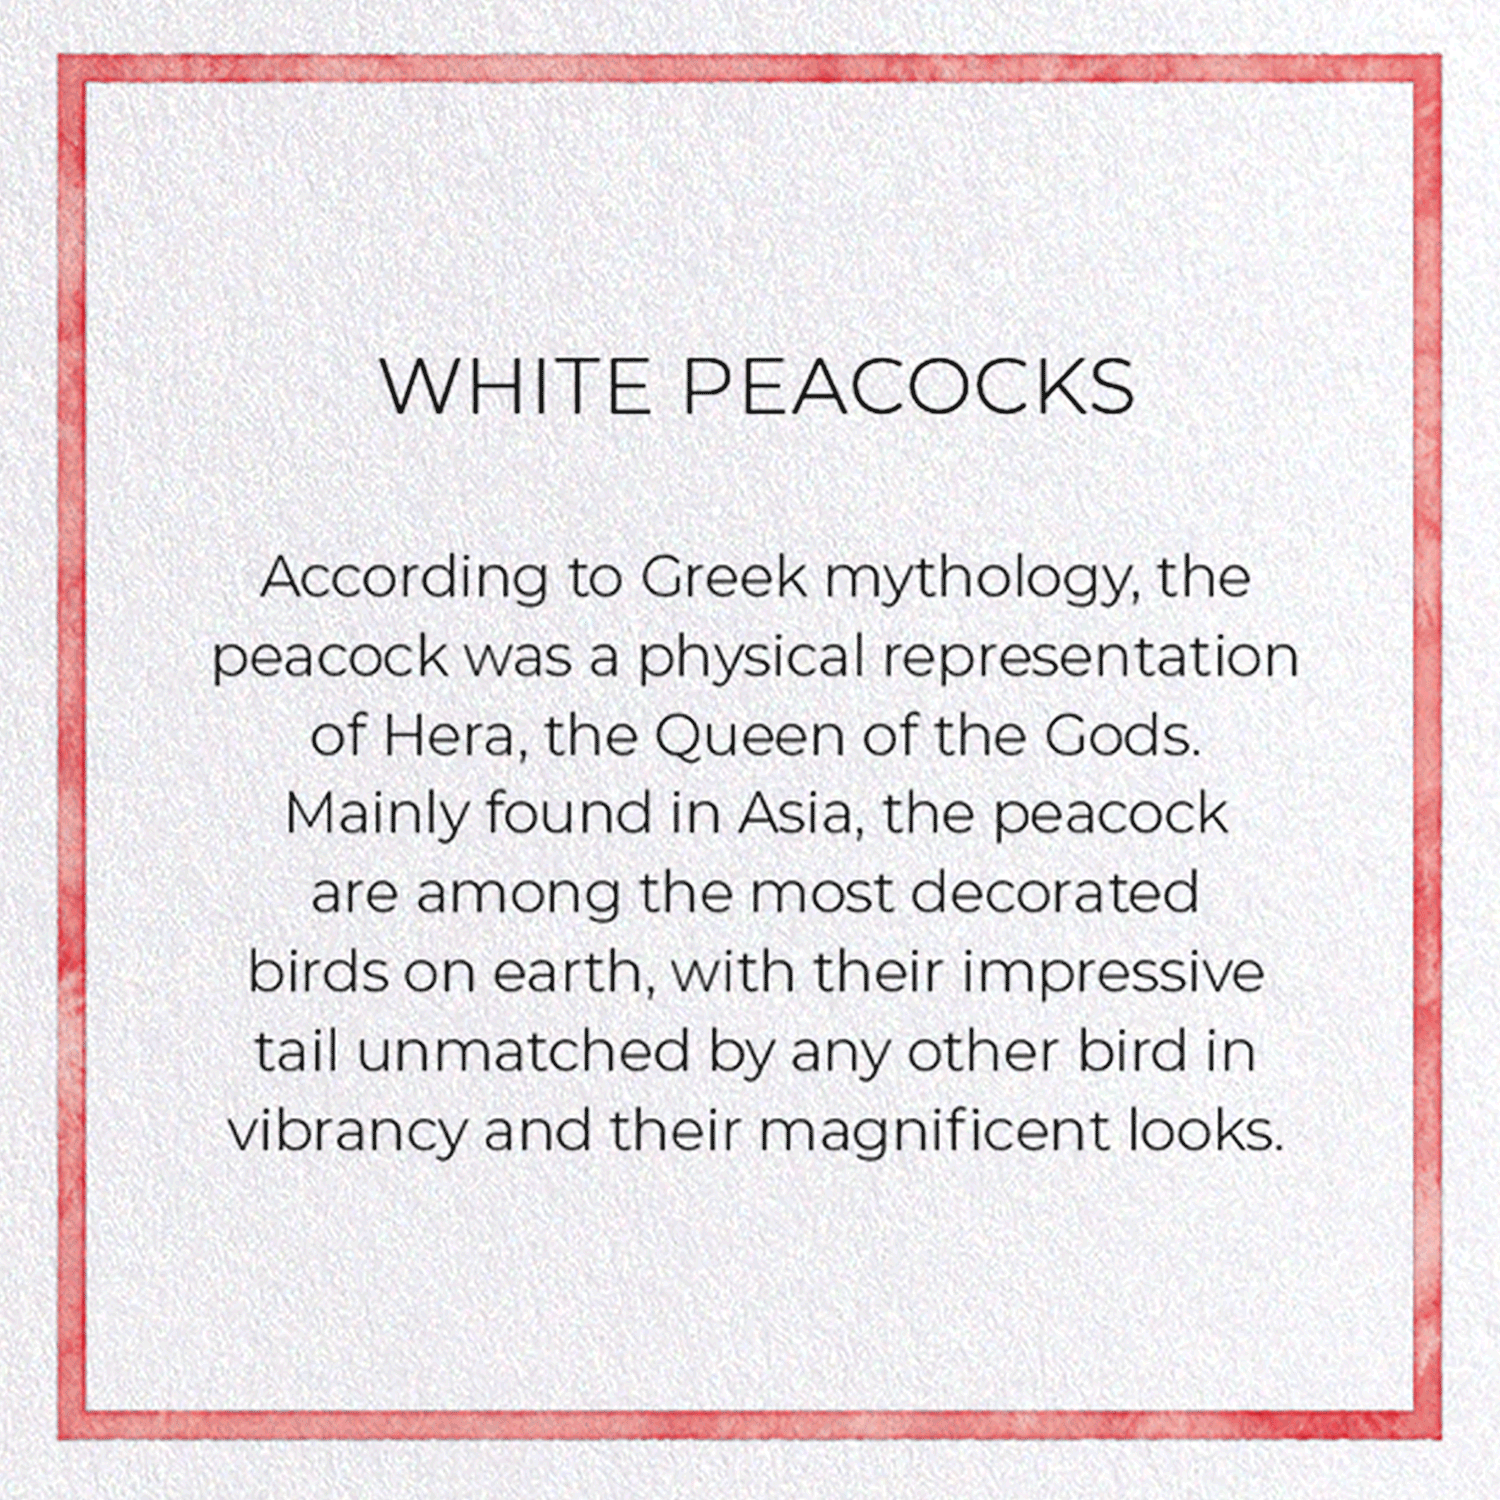 WHITE PEACOCKS